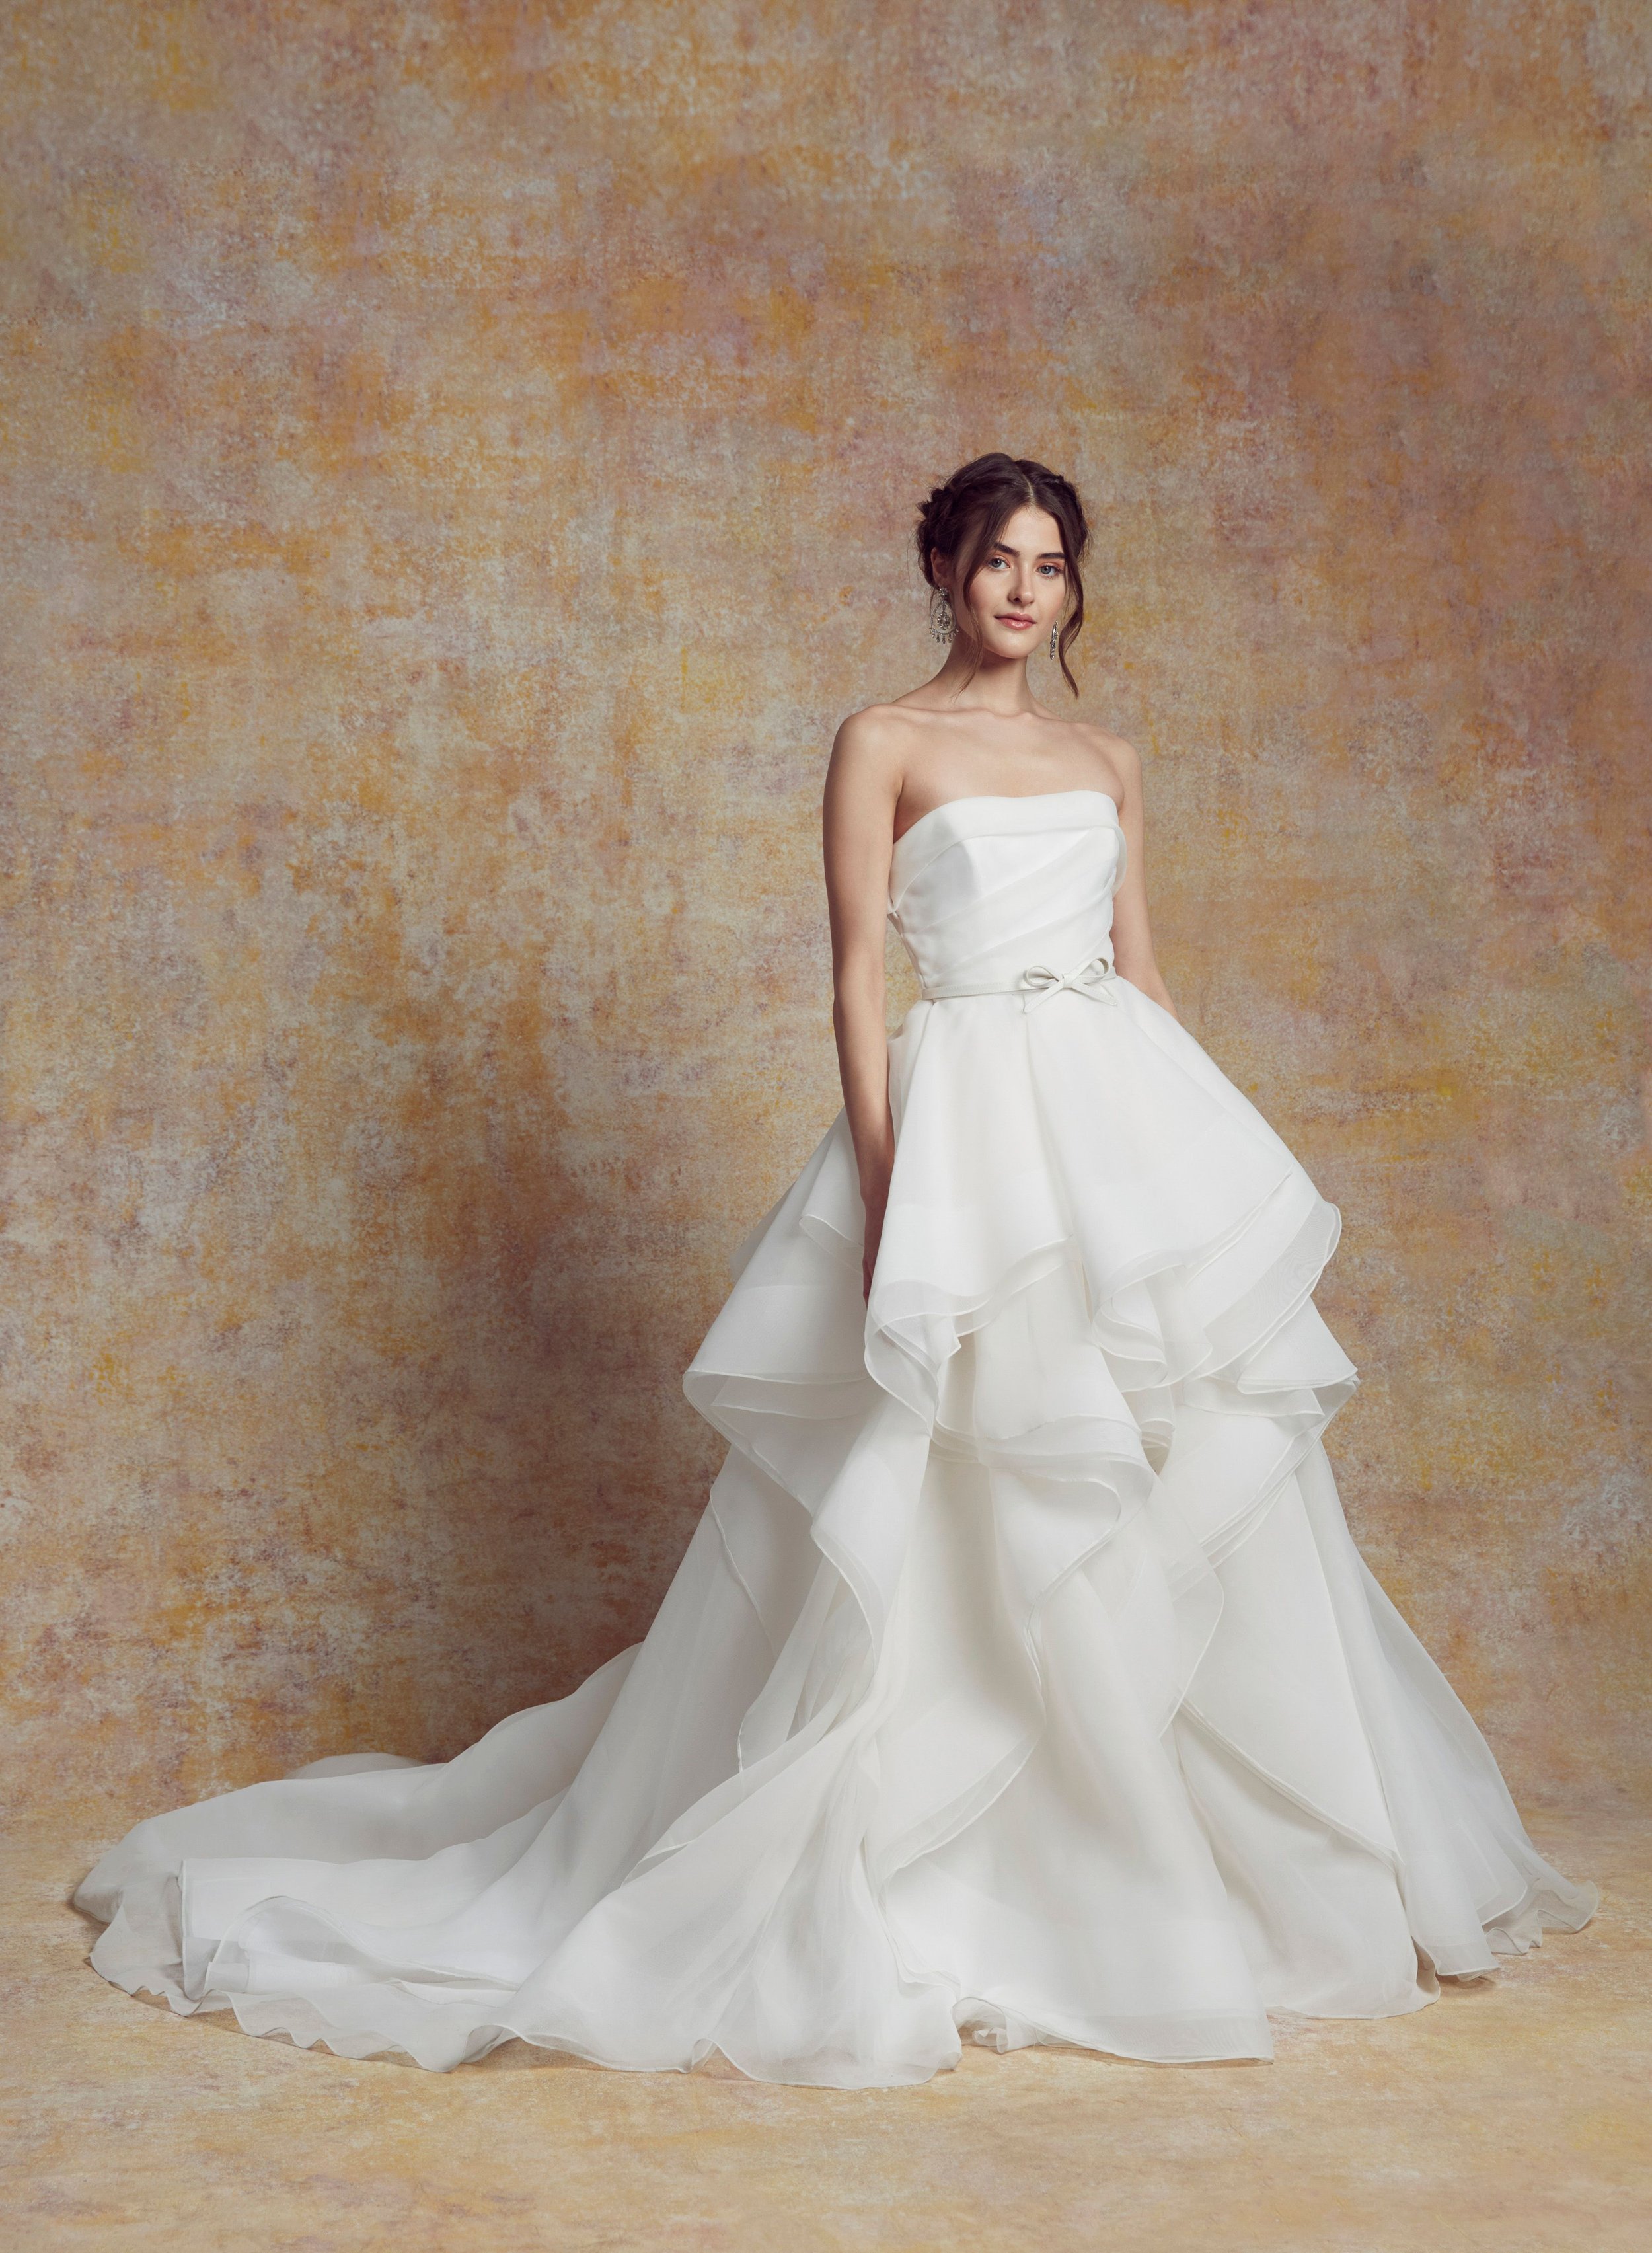 blanc-de-blanc-bridal-boutique-cleveland-dress-wedding-gown-Hailey.jpeg